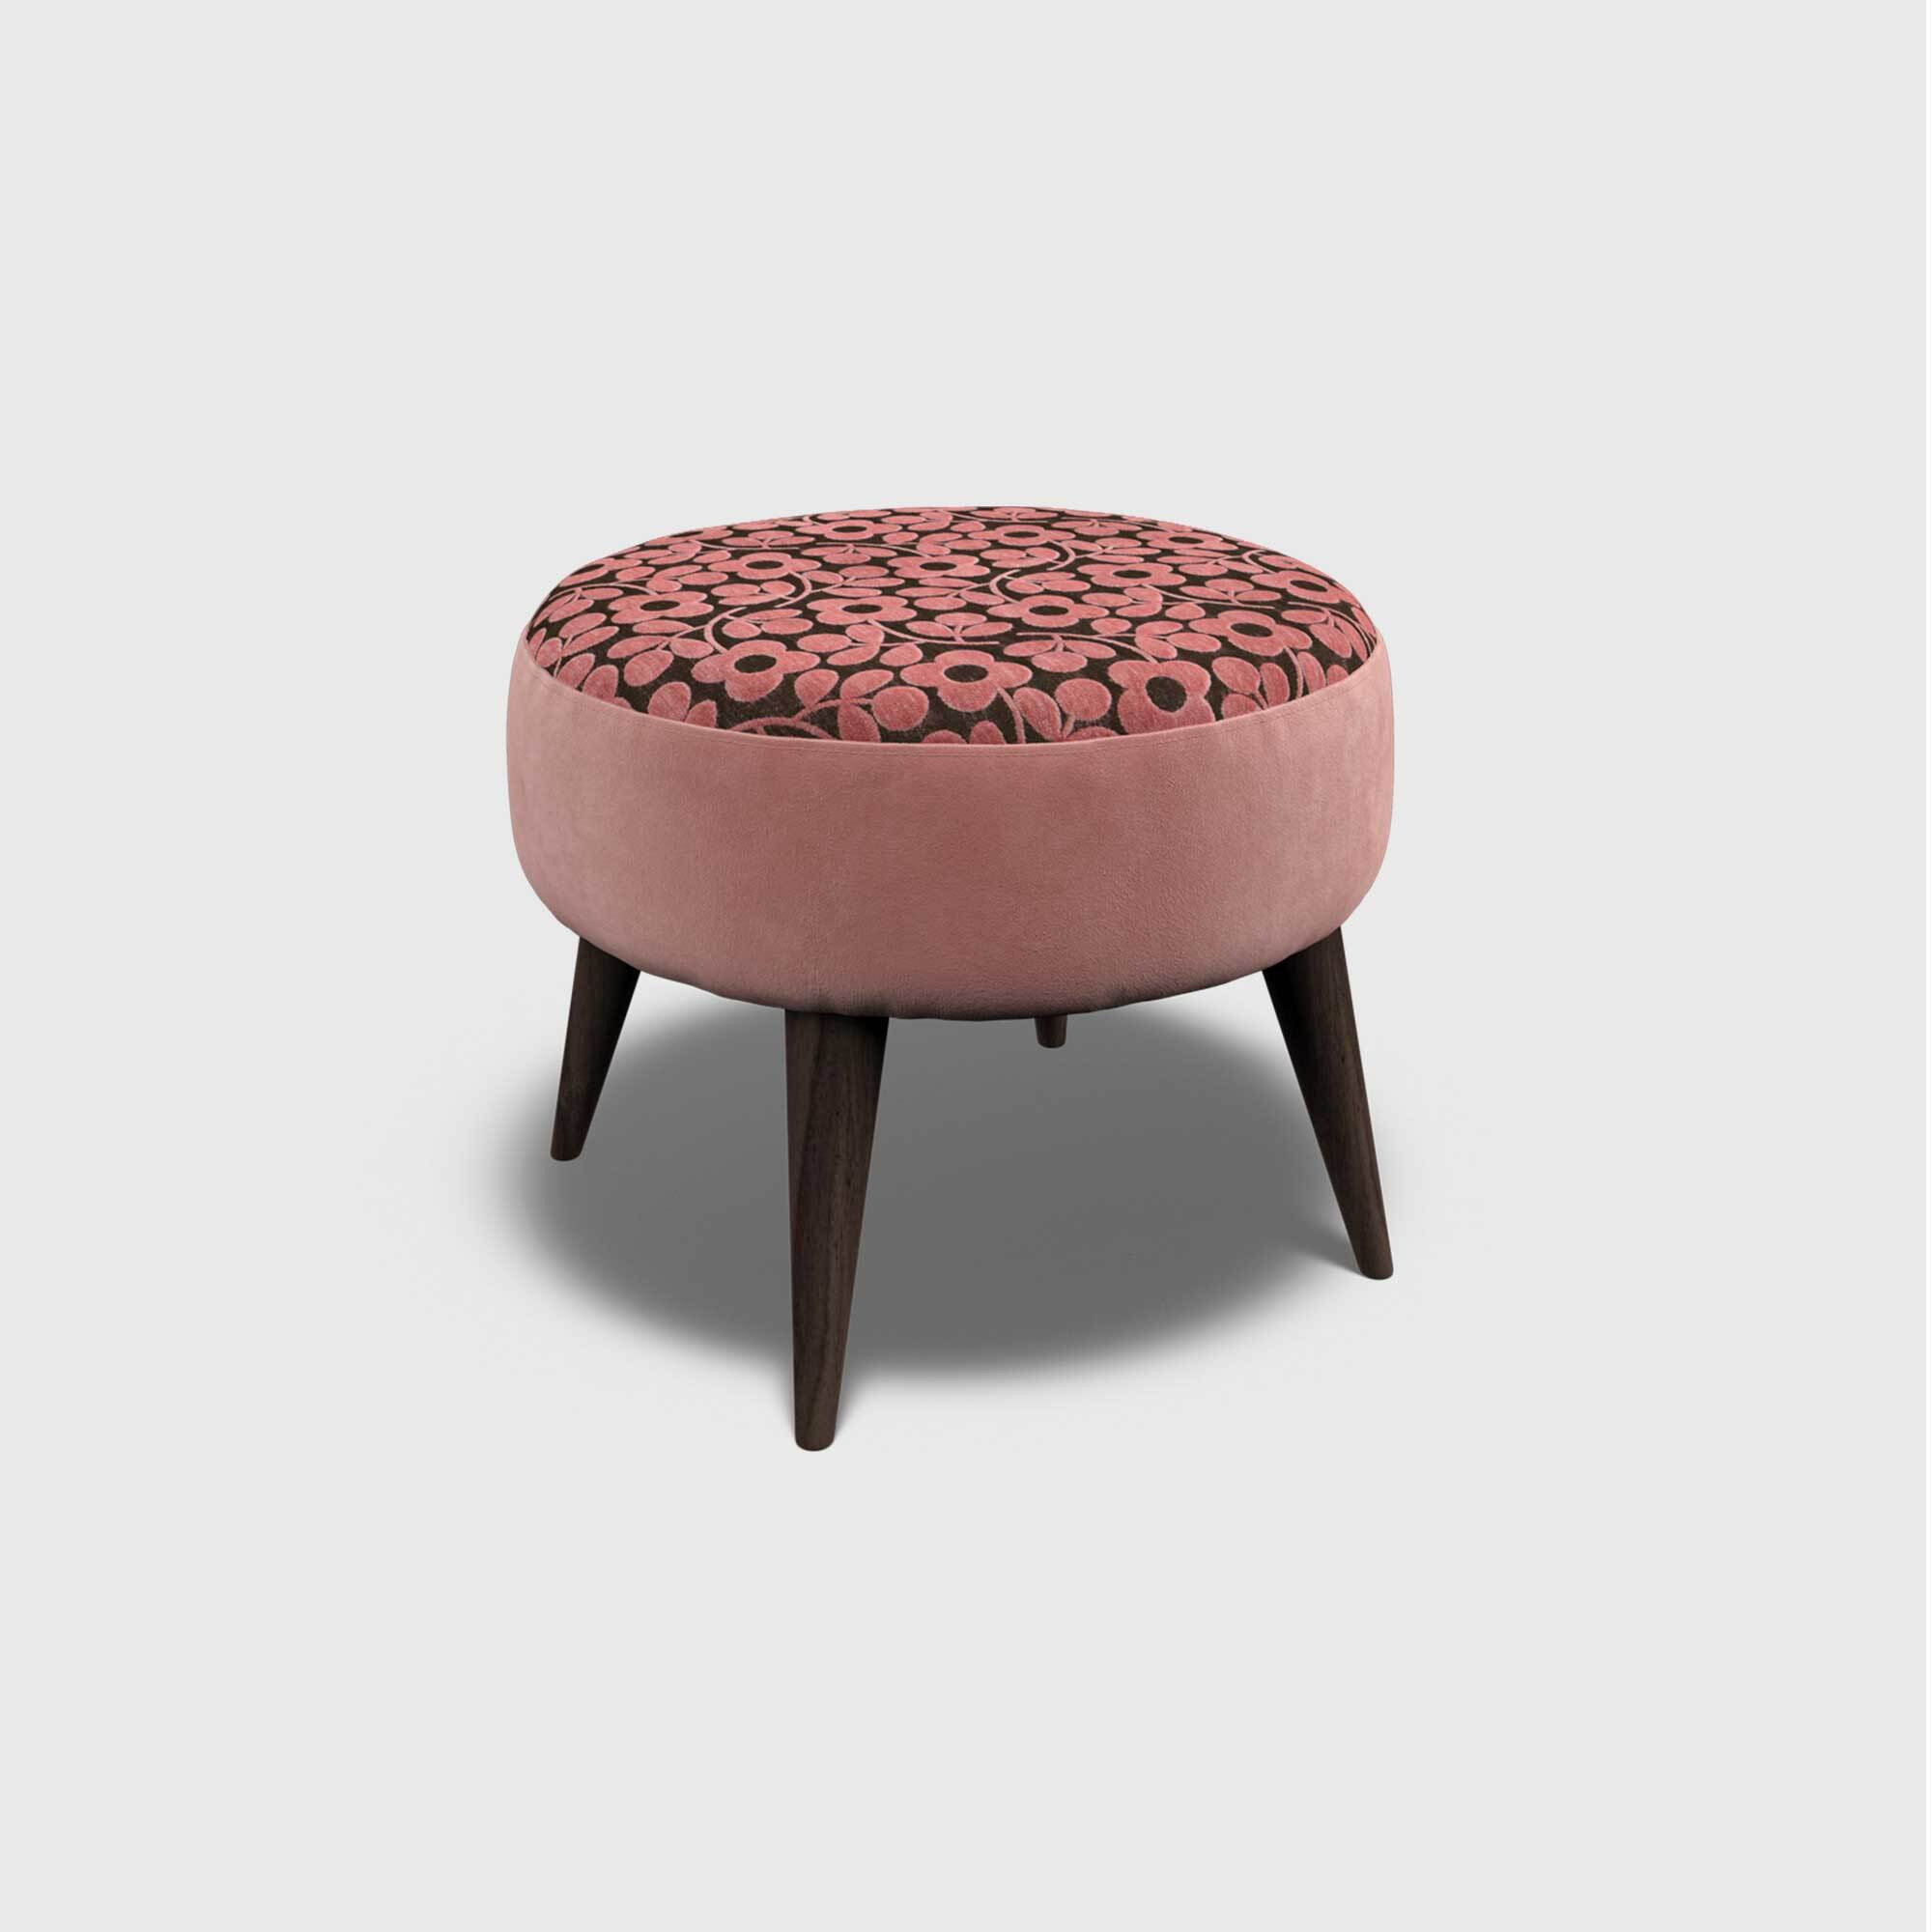 Orla Kiely Roundwood Footstool, Pink Fabric - Barker & Stonehouse - image 1